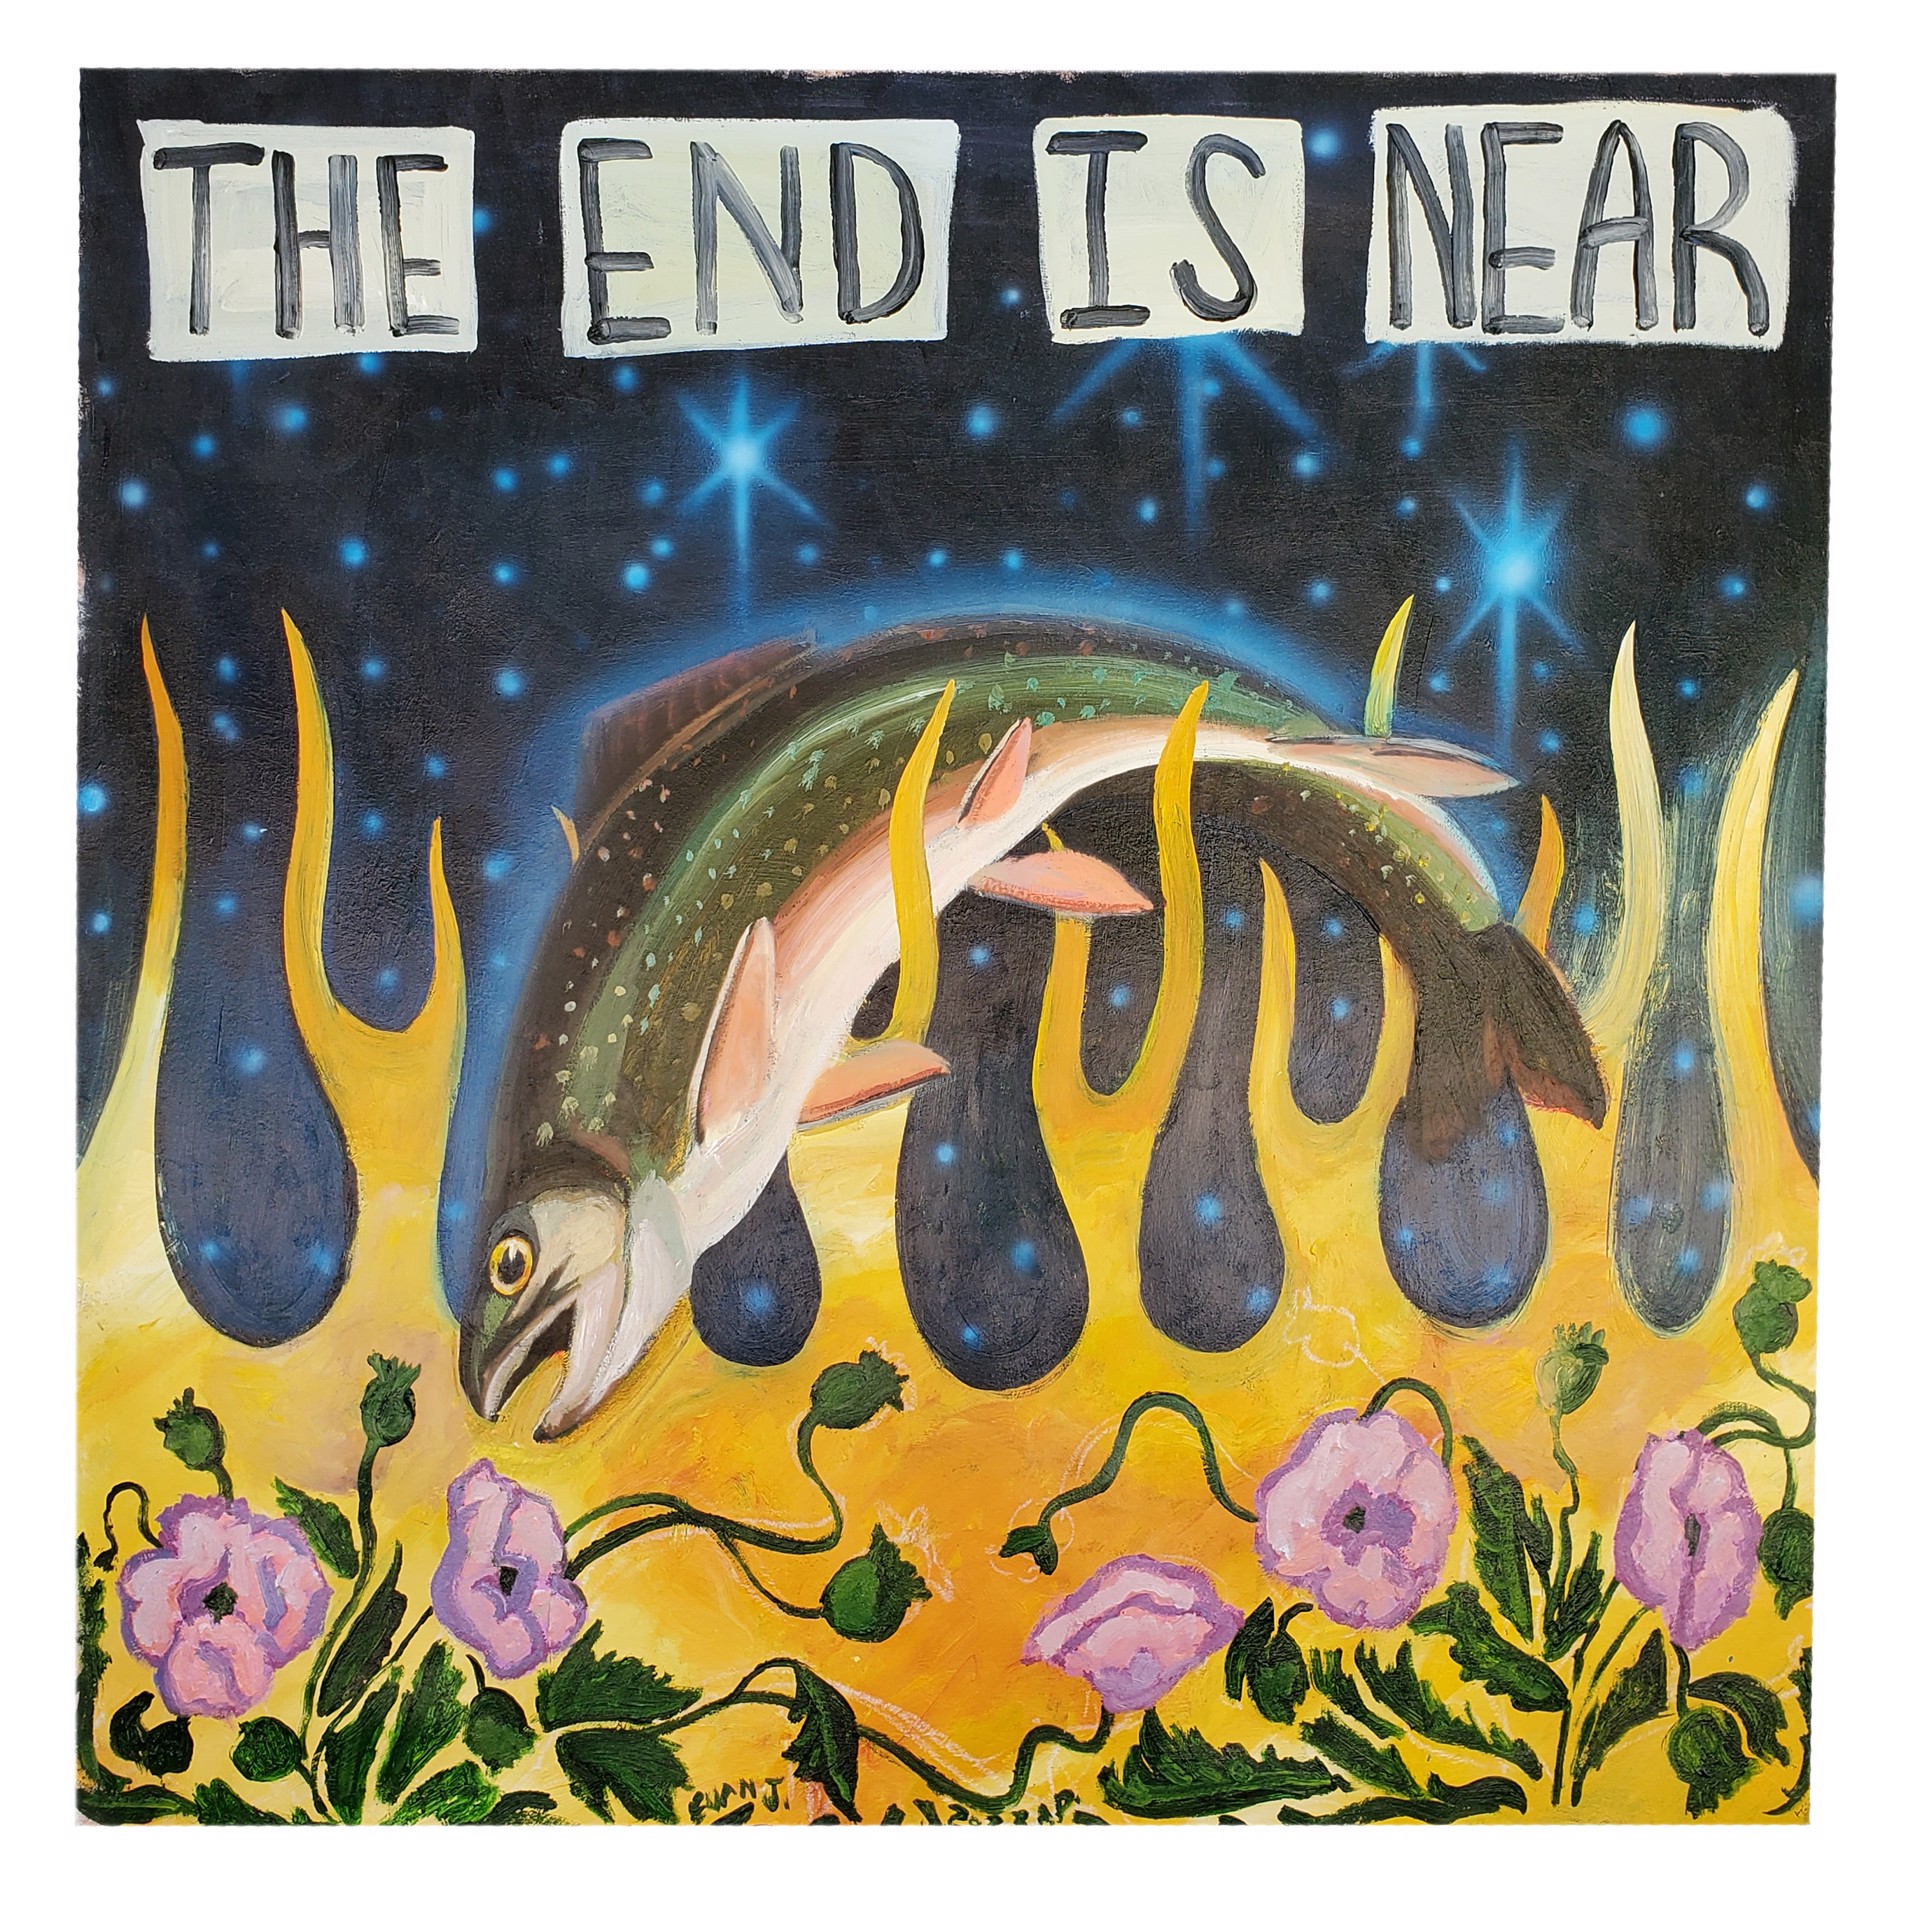 "THE END IS NEAR" by Evan Jones